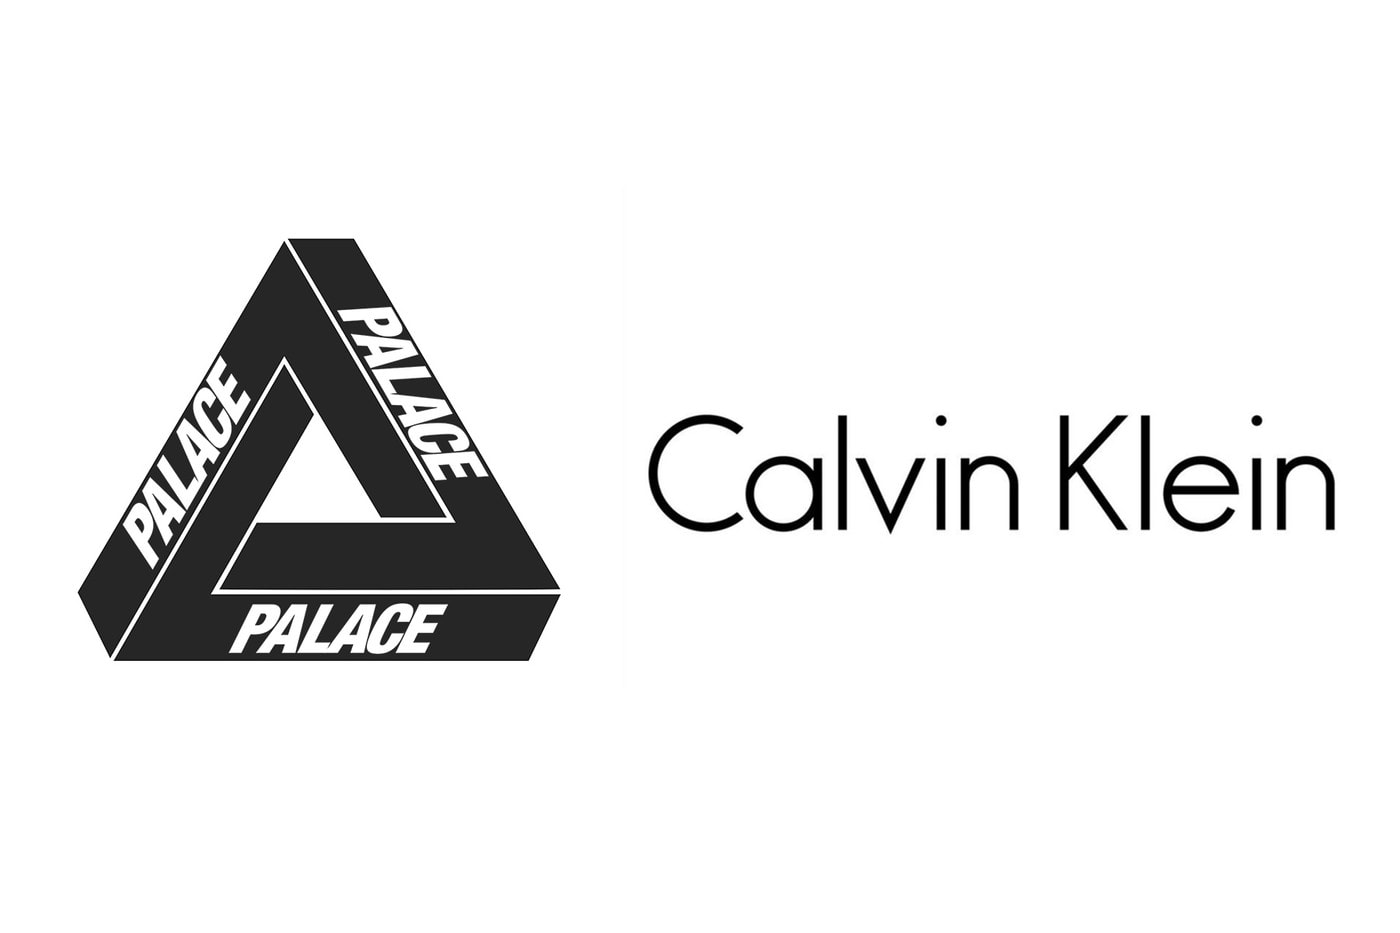 Palace x Calvin Klein 重磅聯名系列即將登場